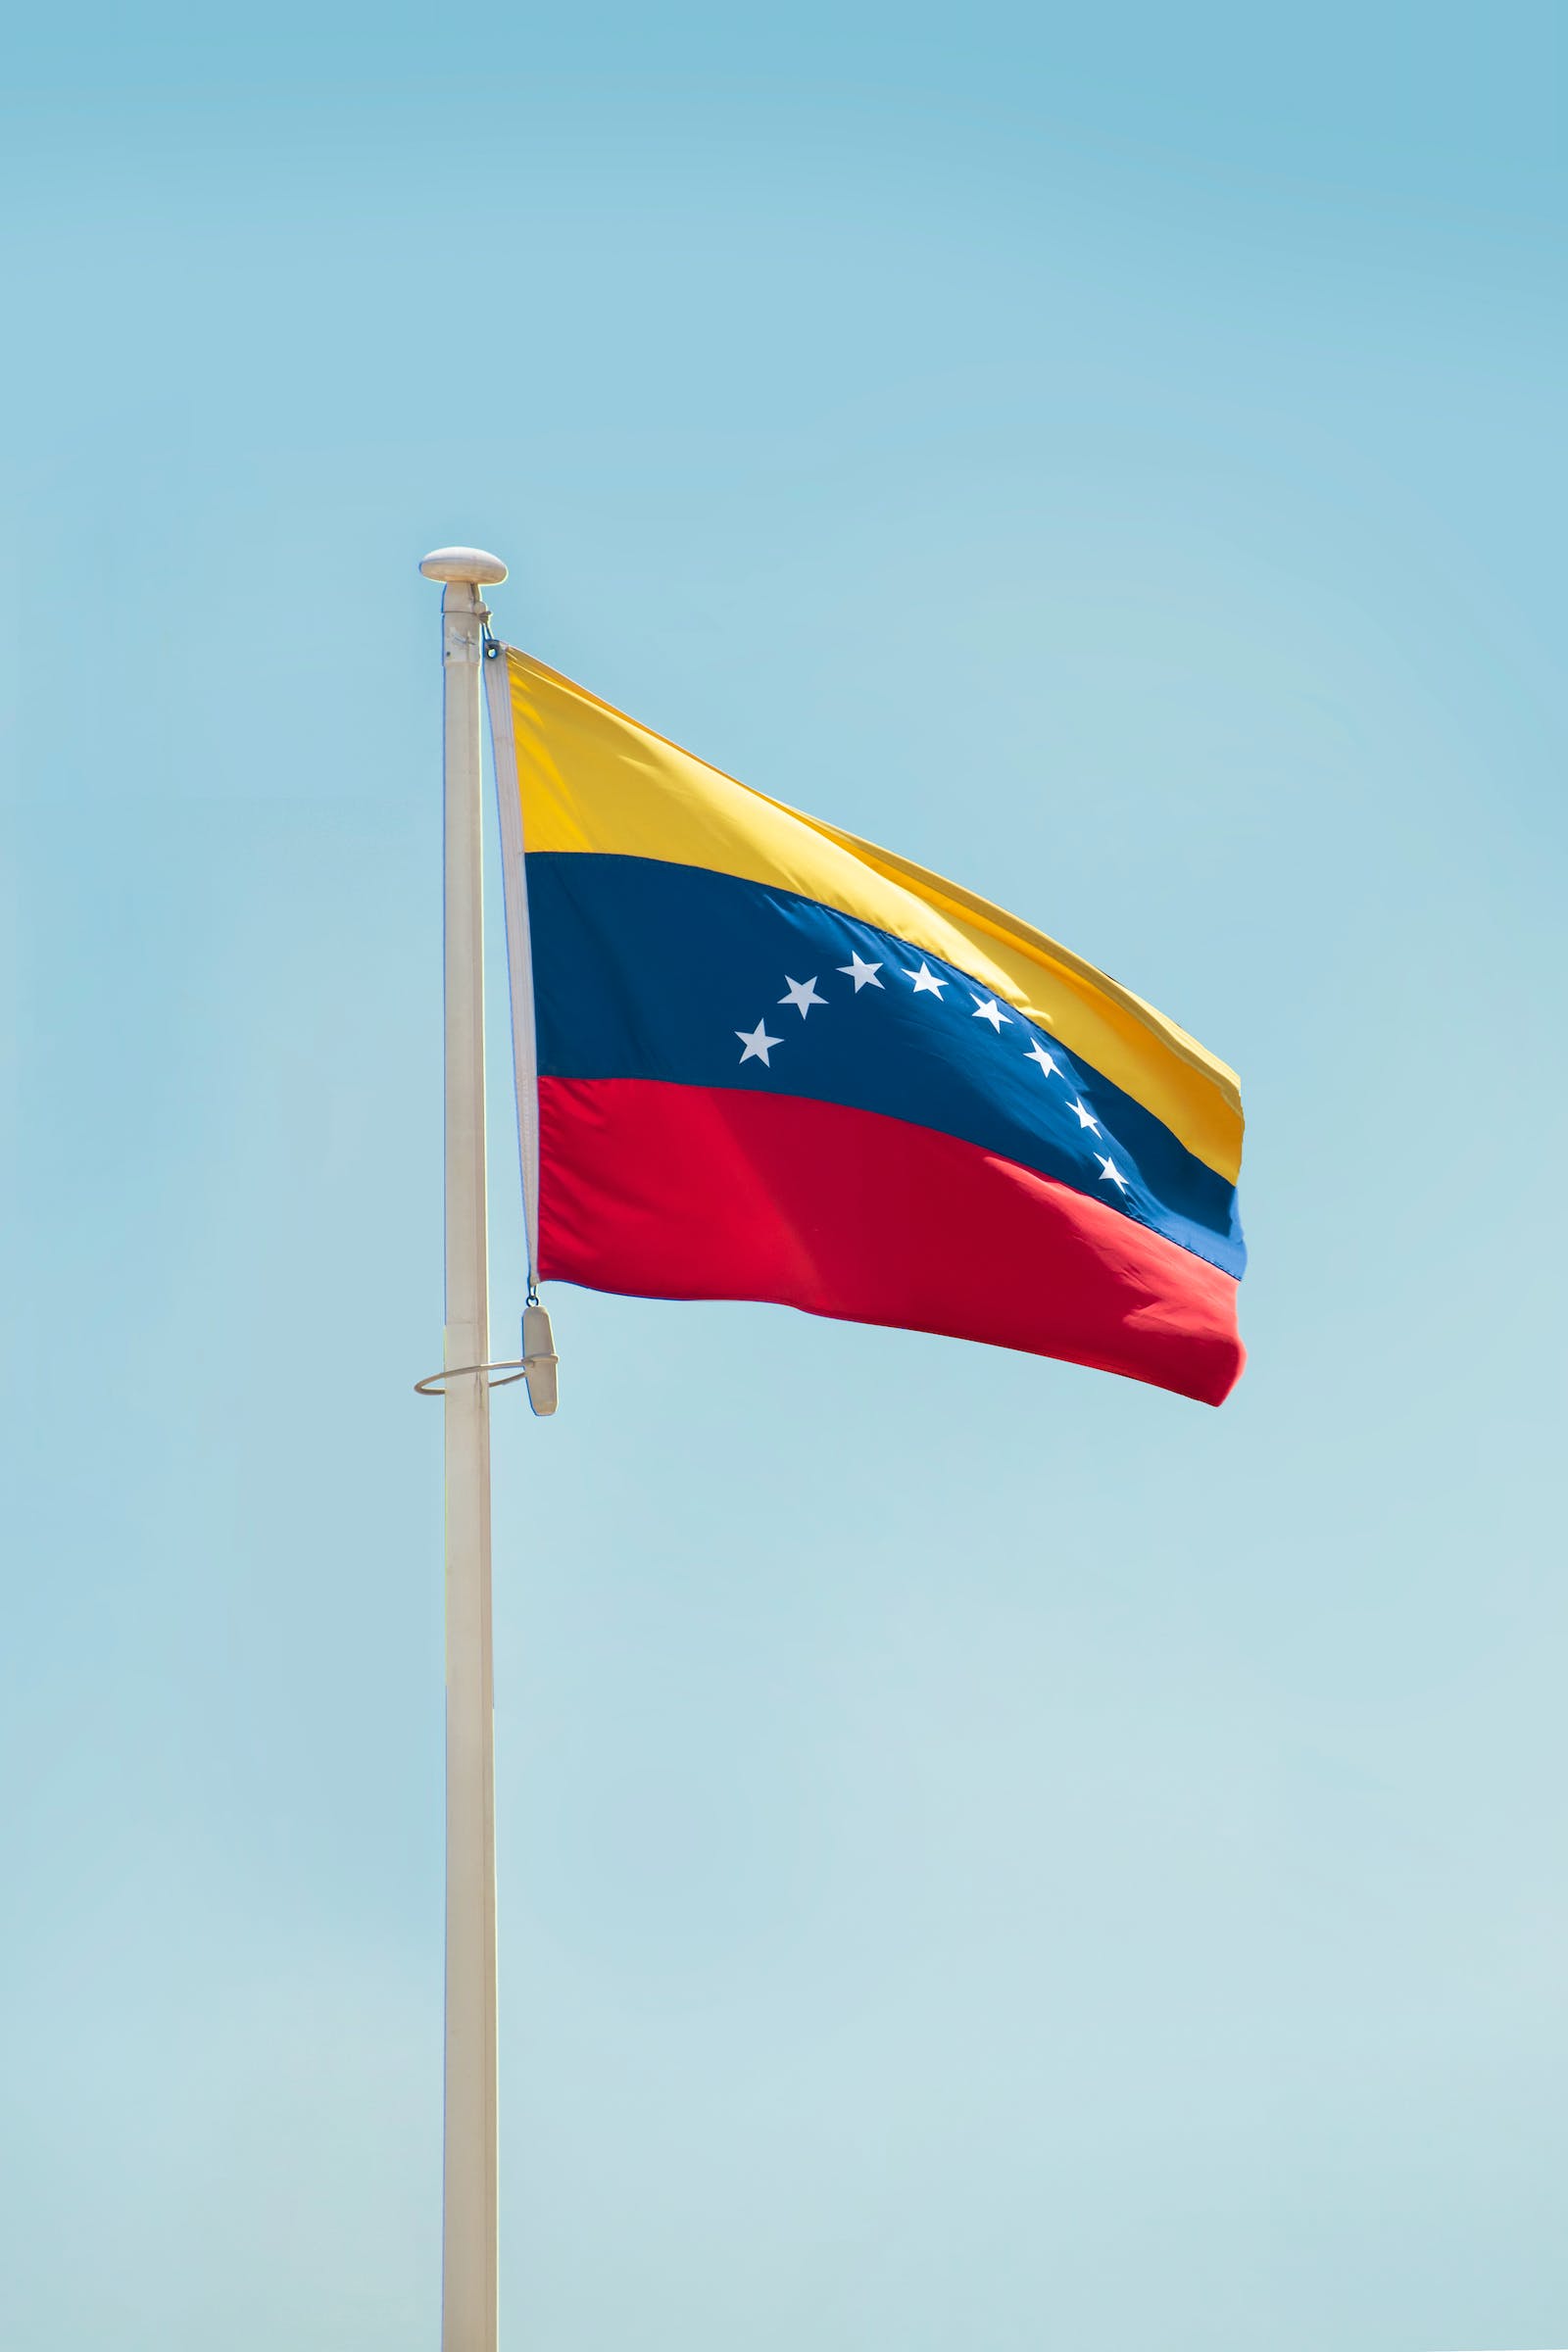 10 Fascinating Facts About Venezuela